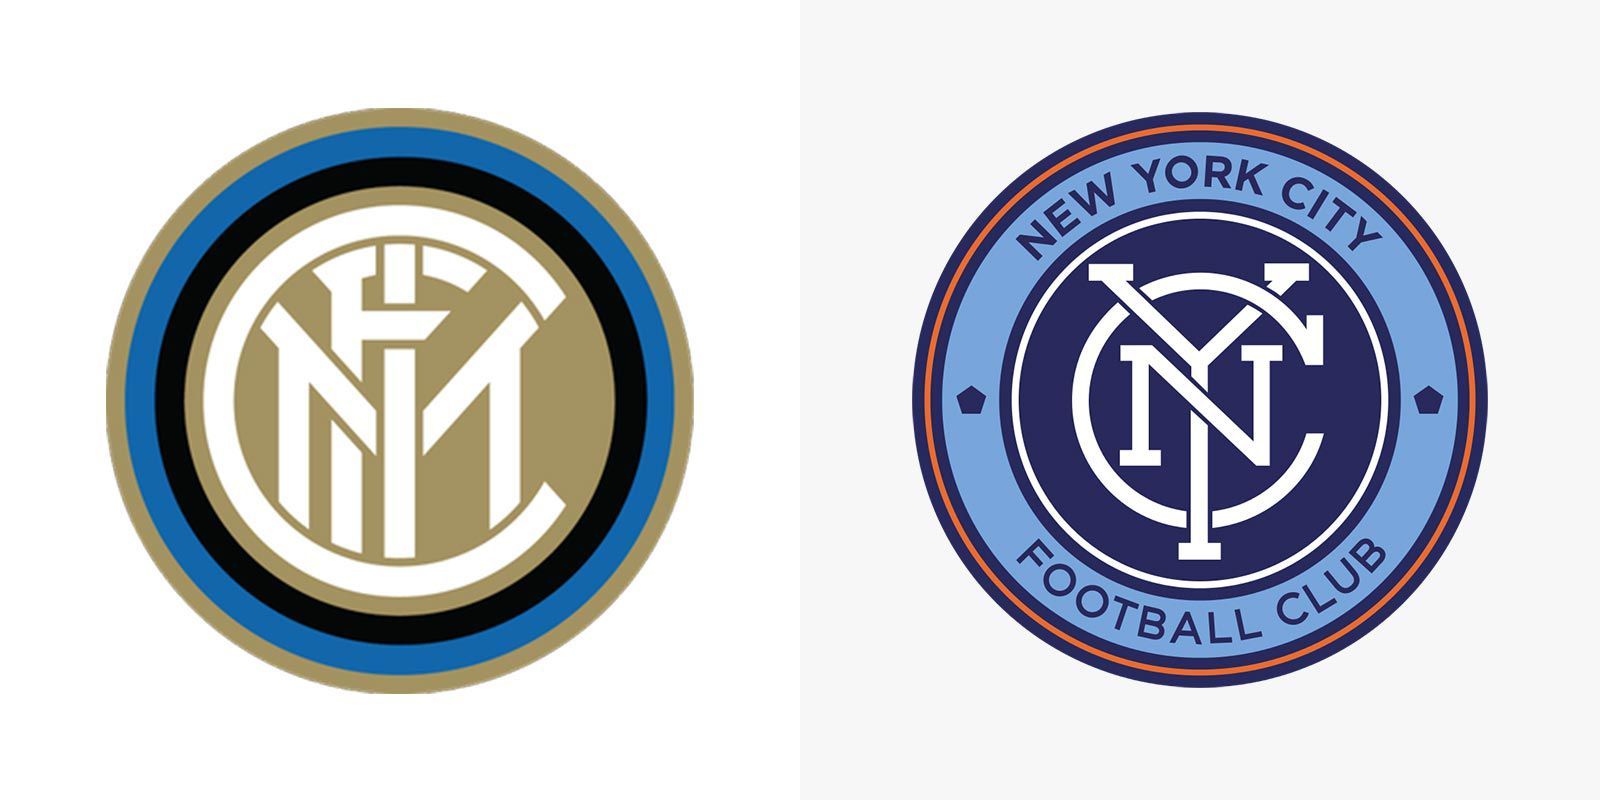 FC Inter Milan - Football club Emblems